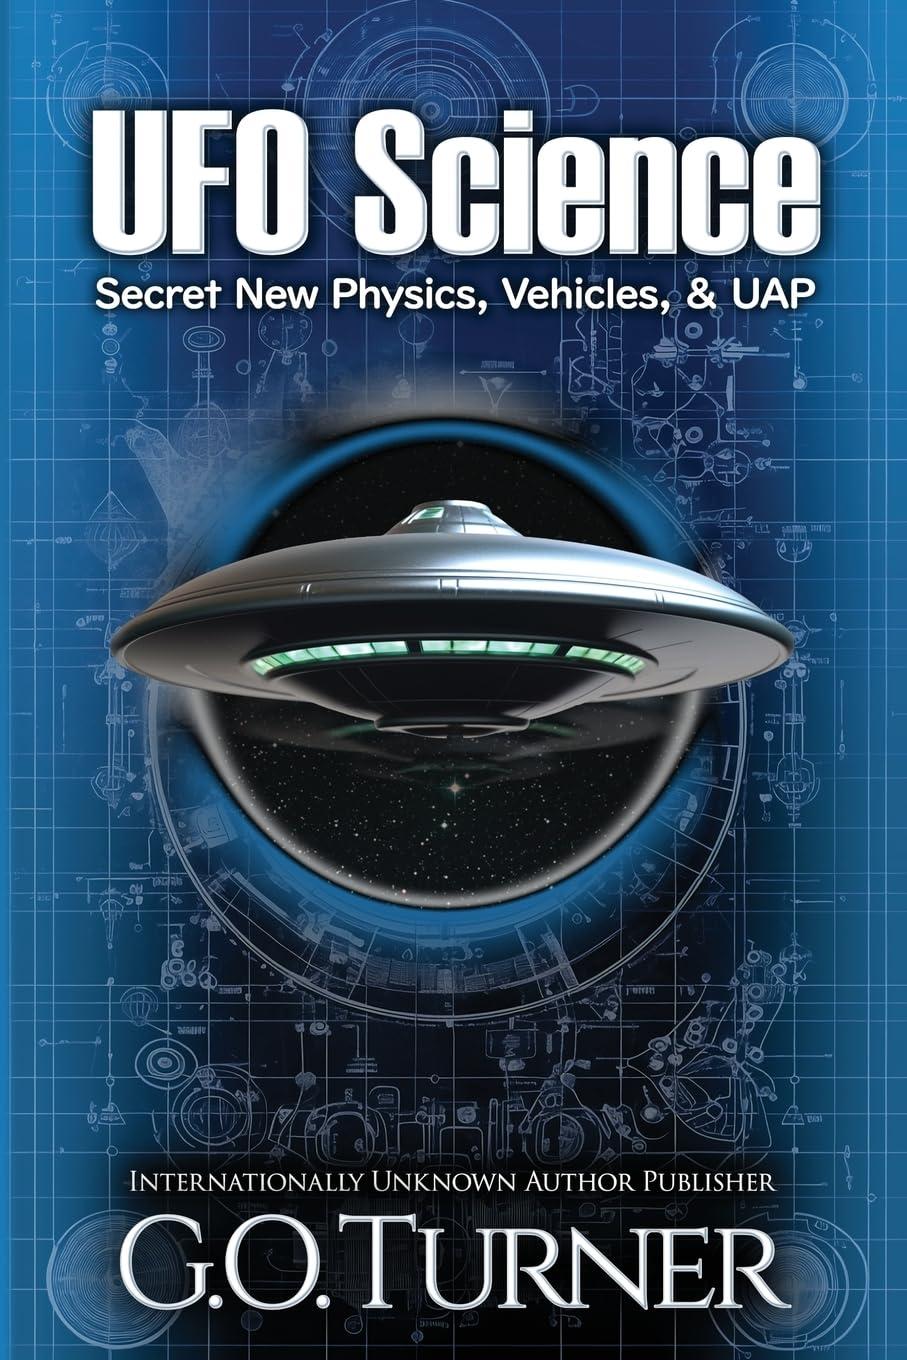 ufo science secret new physics vehicles and uap 1st edition g o turner, kaz morran b0chybhvwn, 979-8989145904